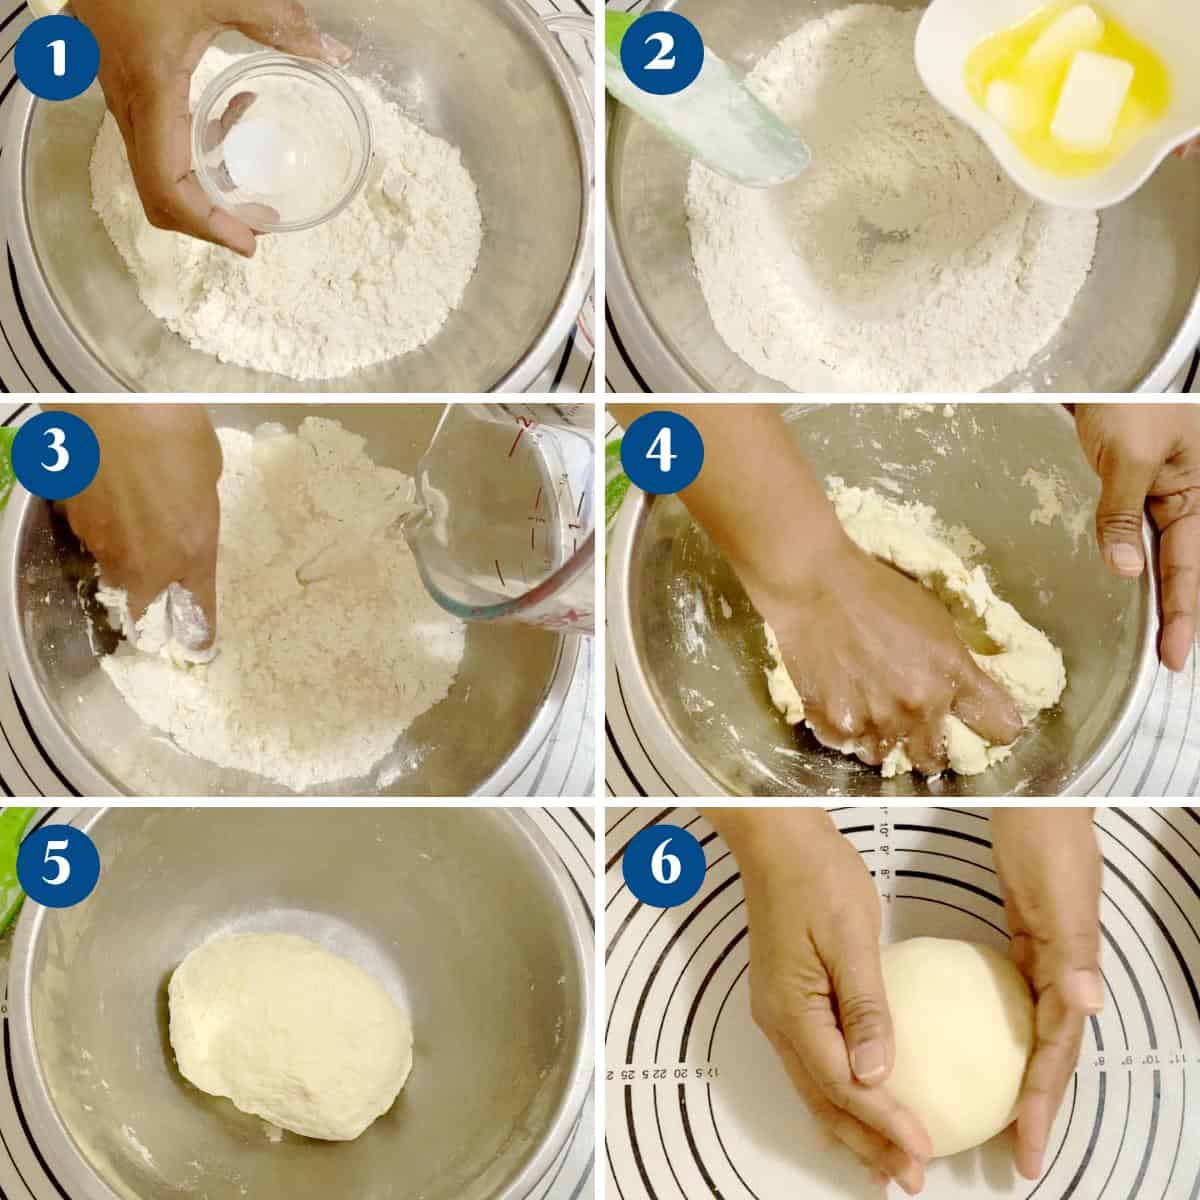 Progress pictures making flatbread dough.